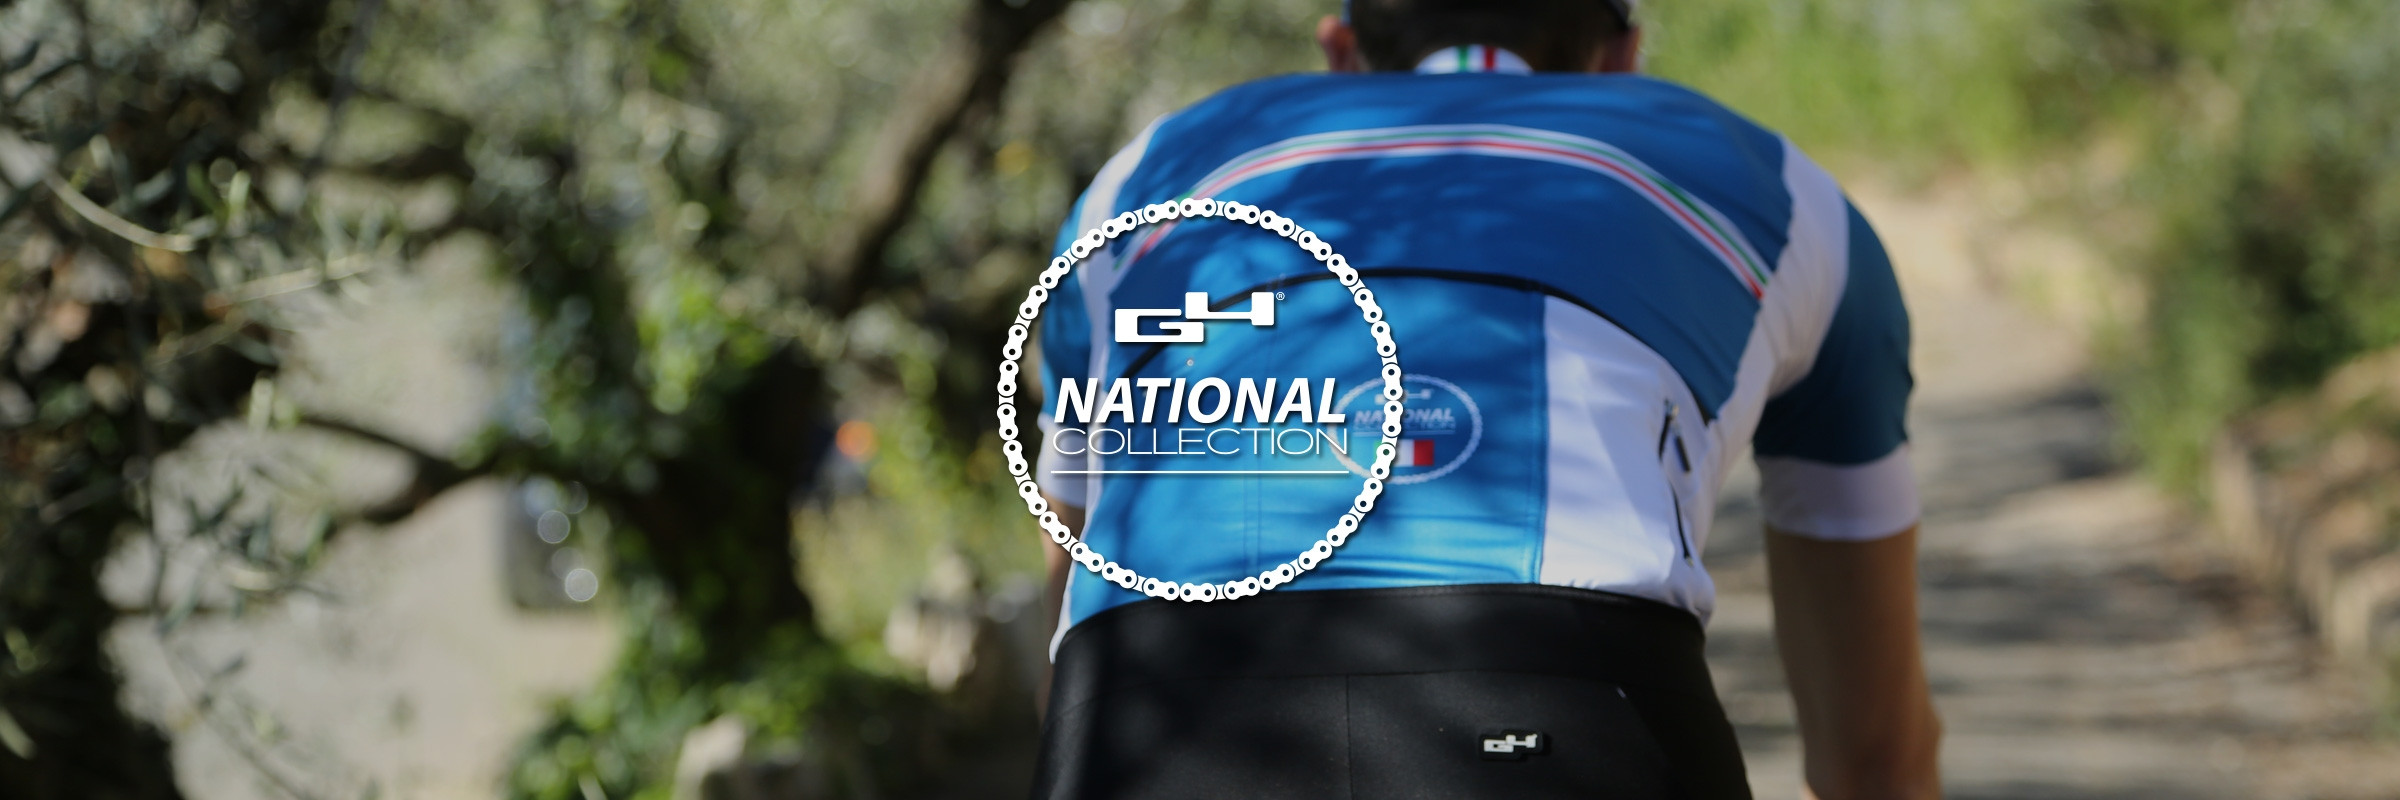 Collection National de cyclisme •••• G4 Dimension